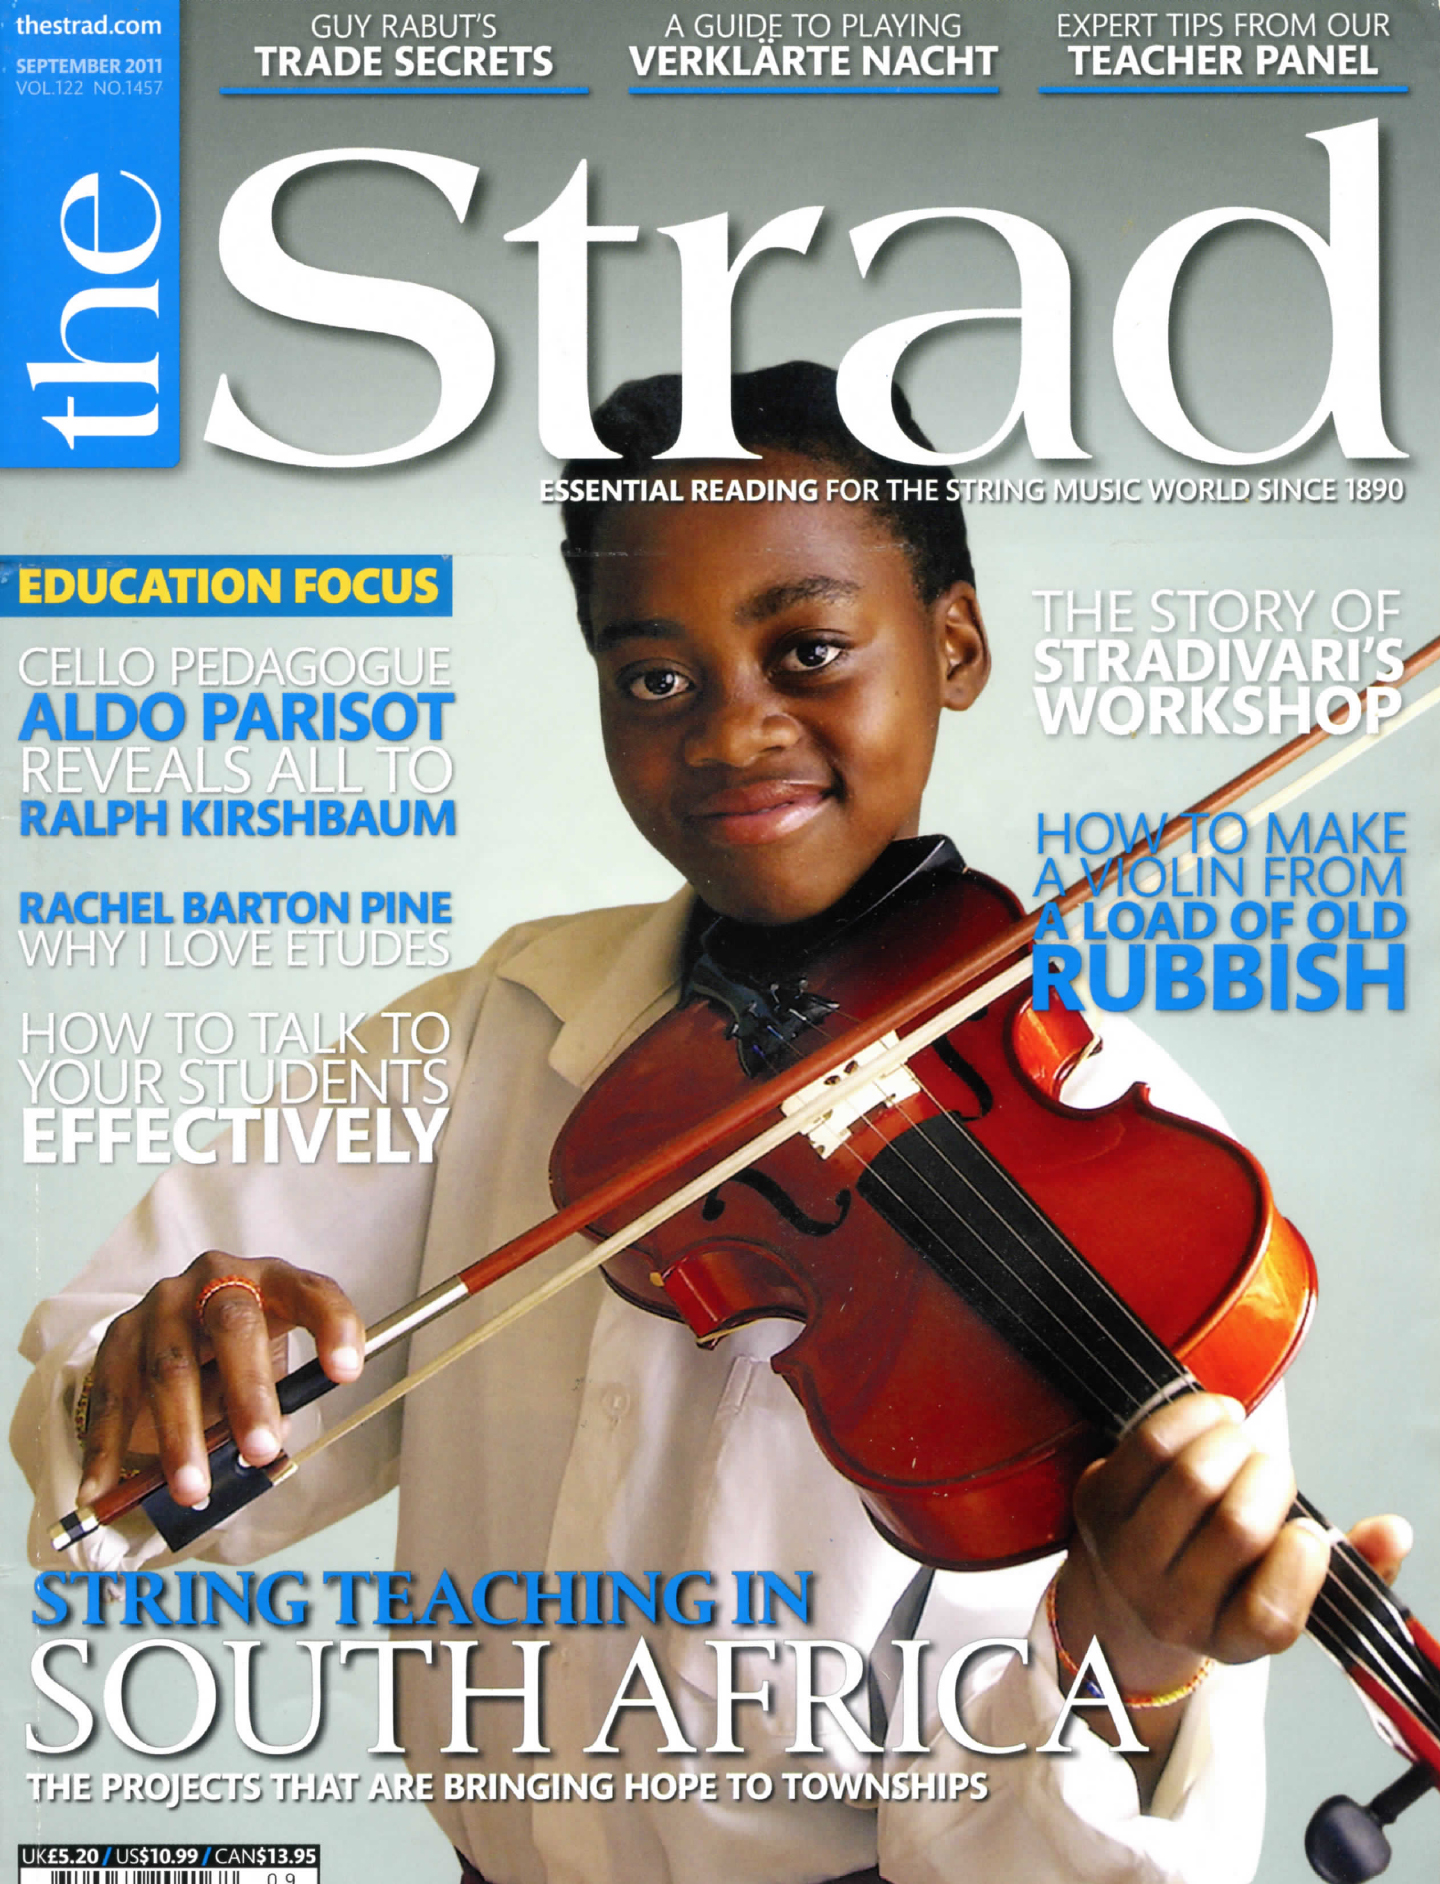 Guy Rabut - The Strad Magazine